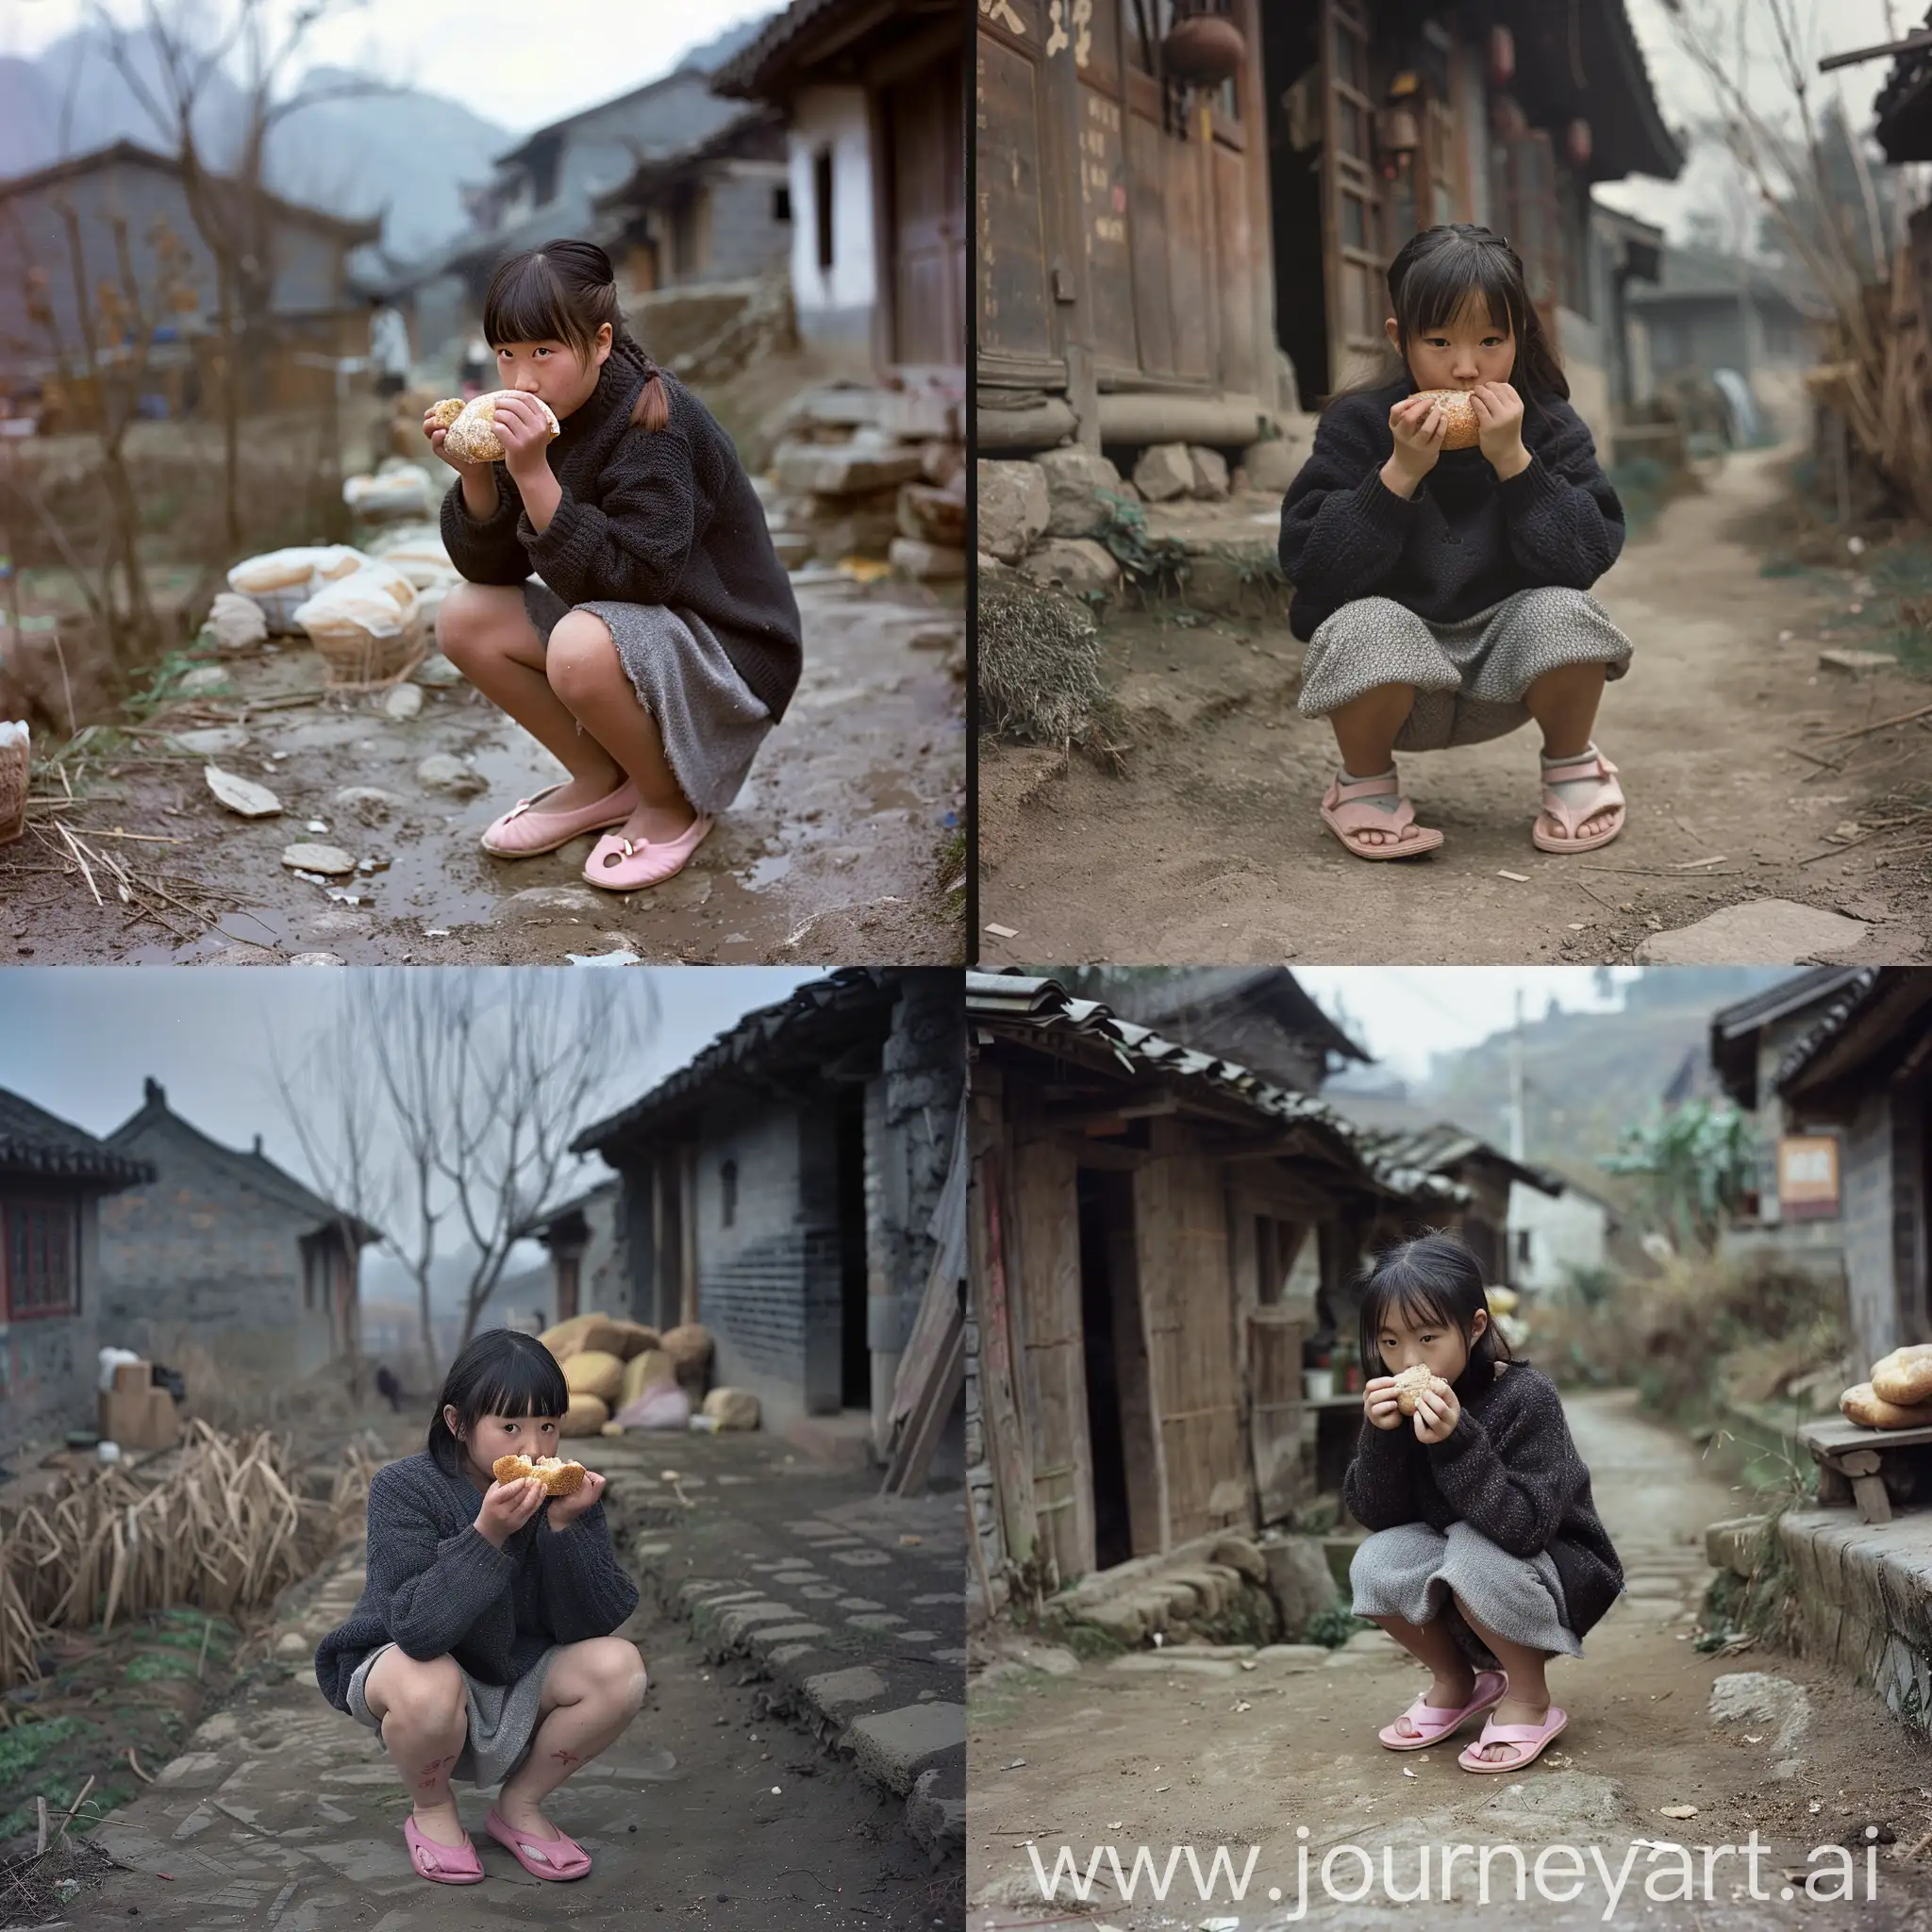 Chinese-Girl-Eating-Bread-in-Village-Scene